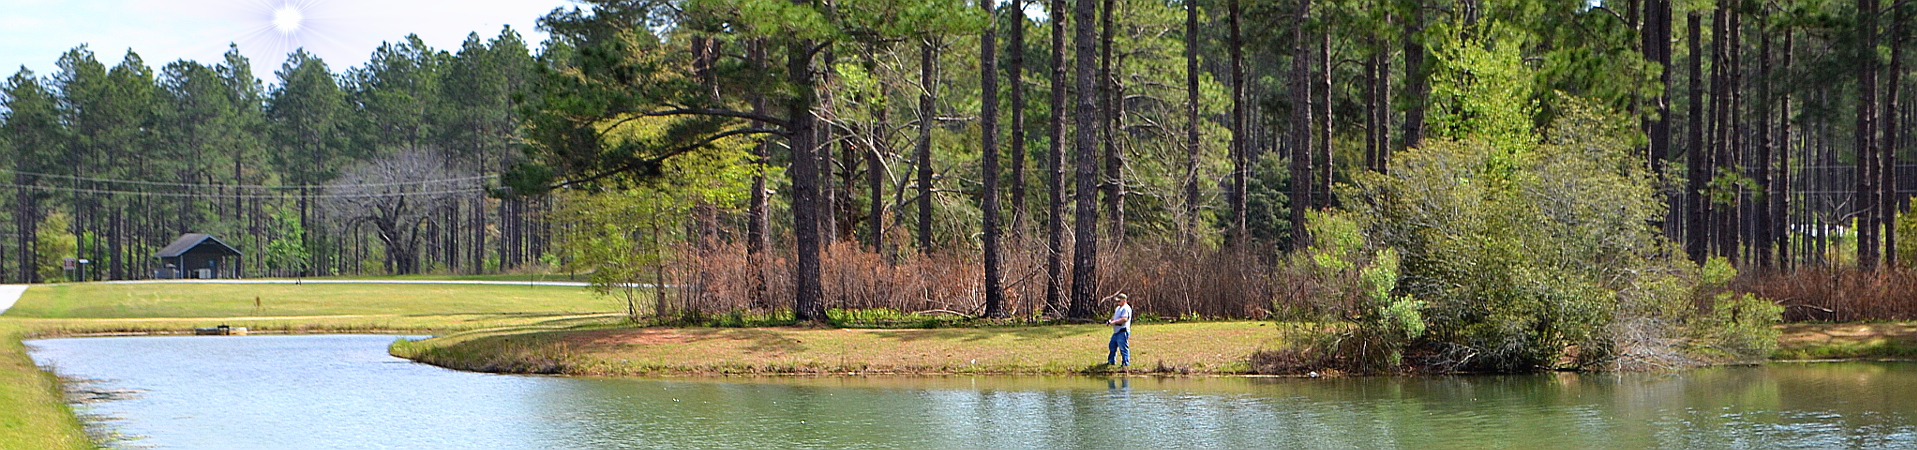 Fishing on Pond